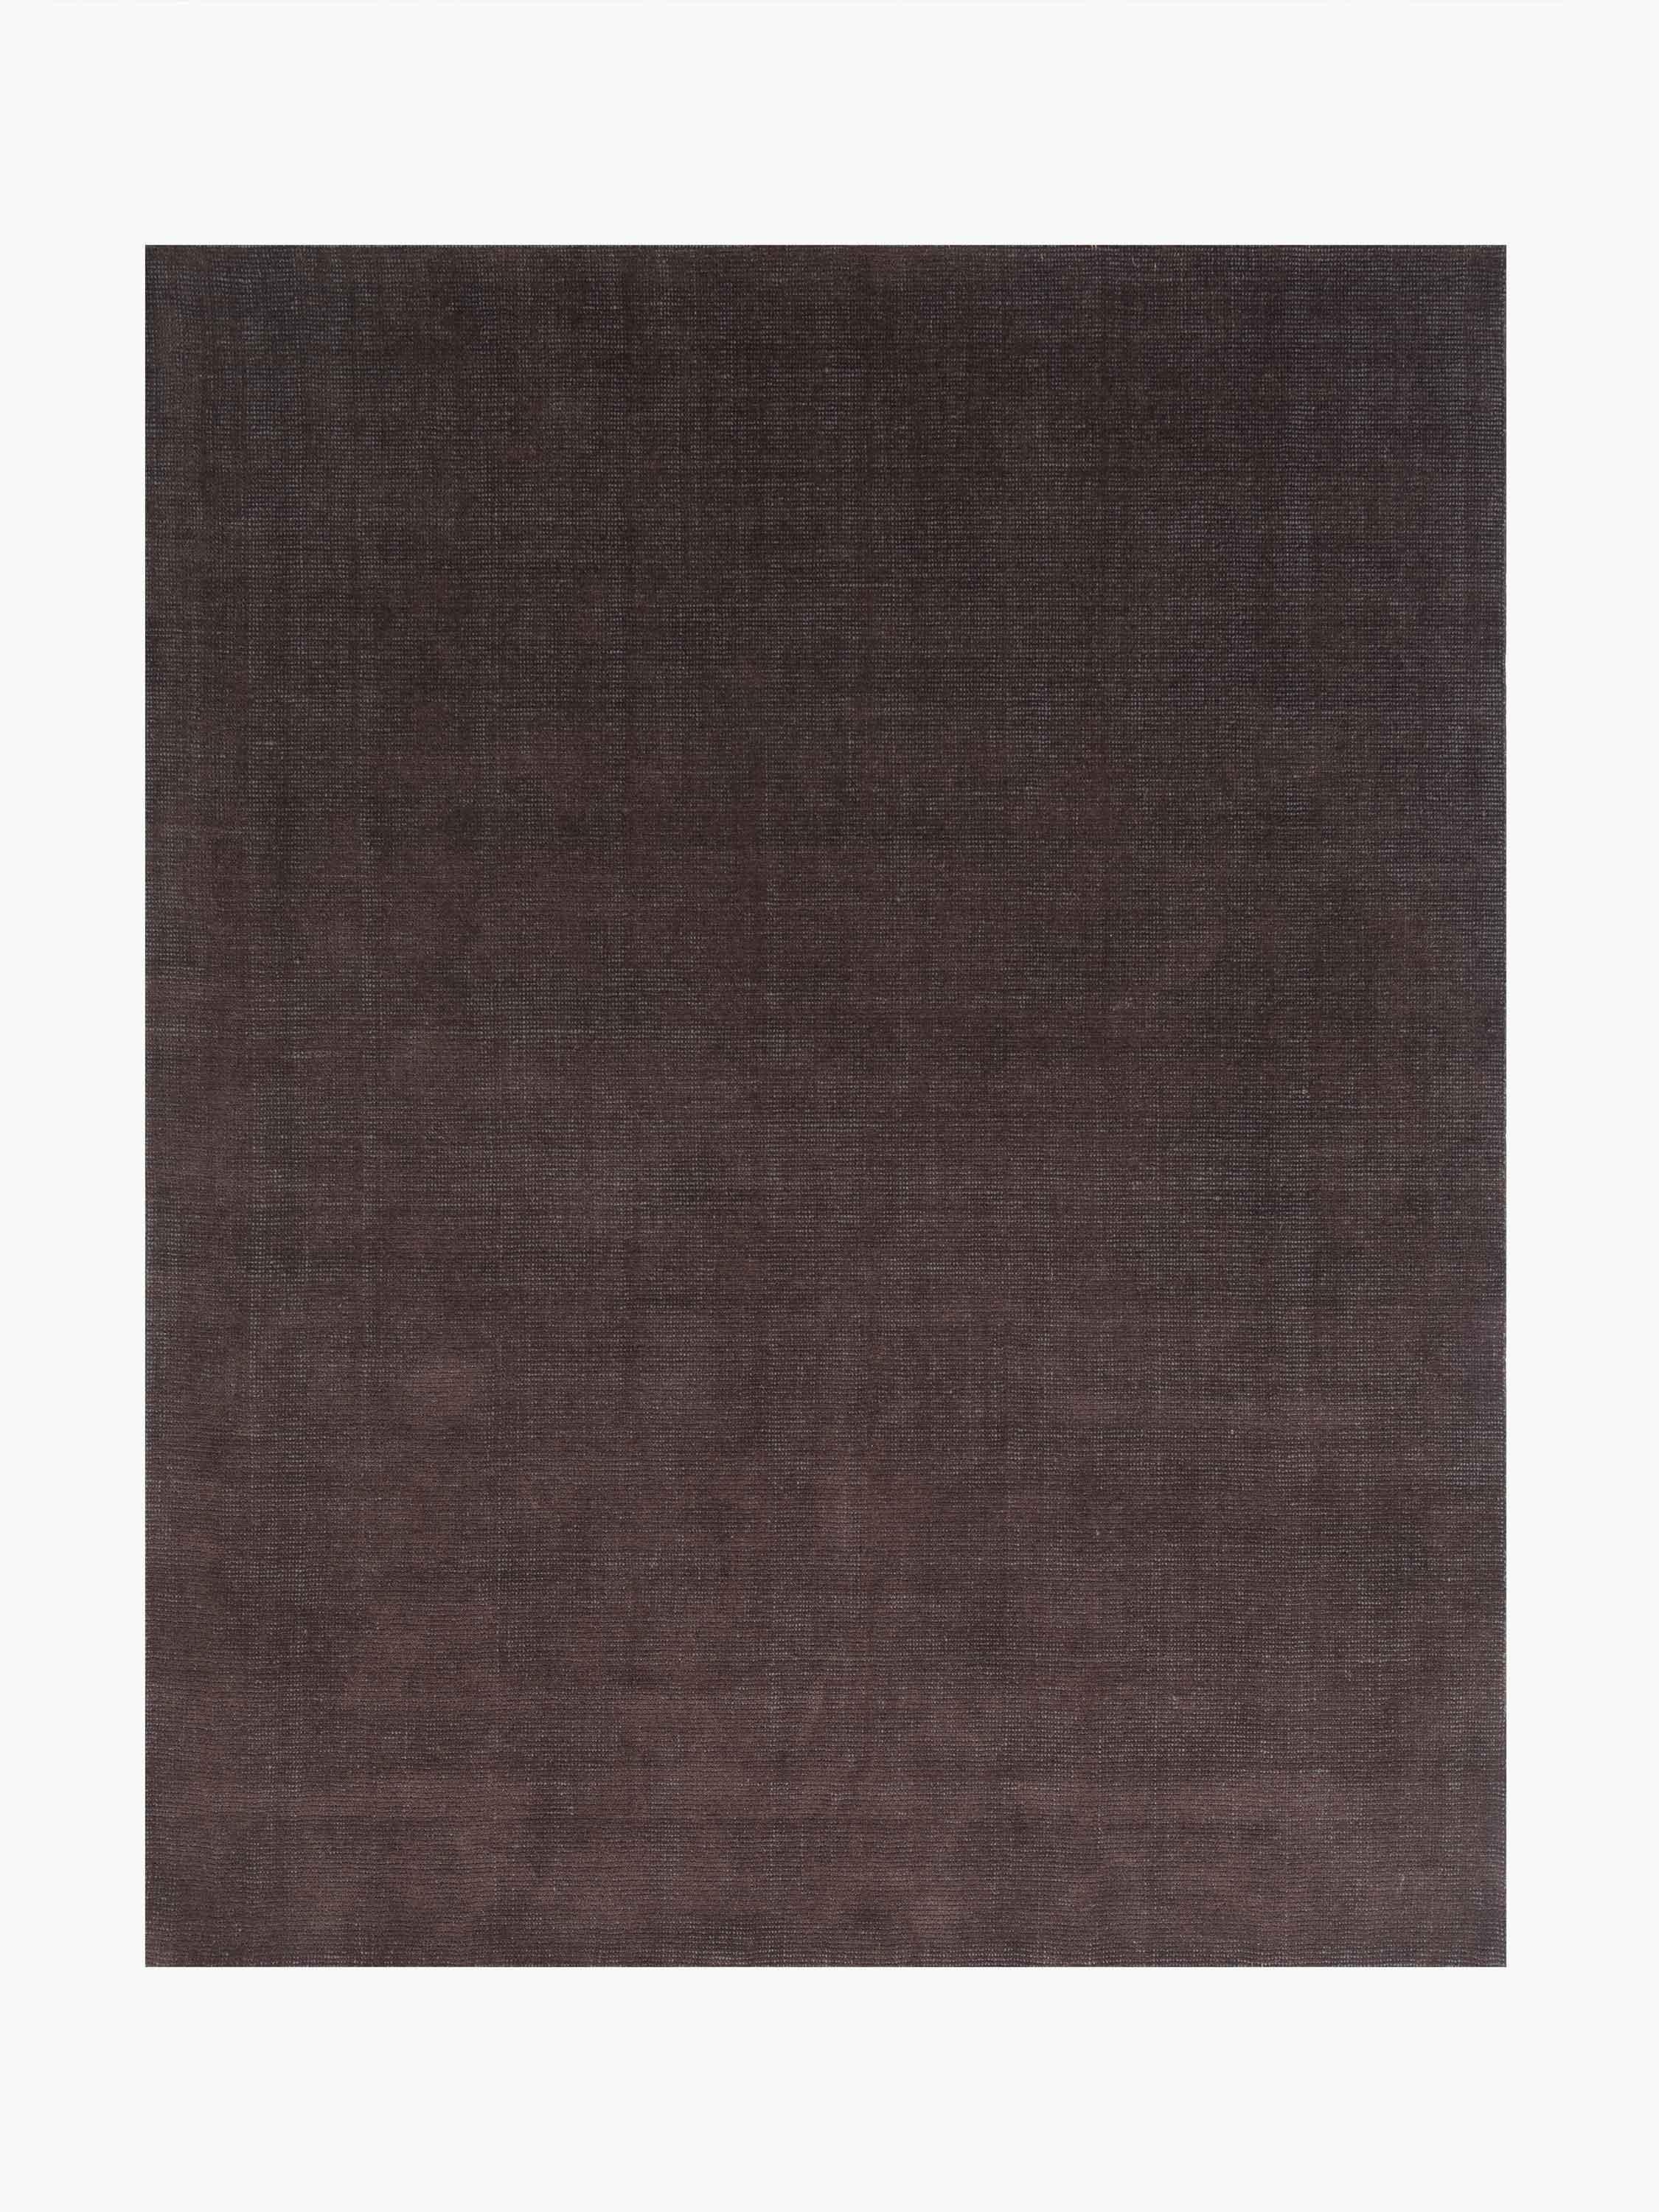 For Sale: Brown (Distressed Wool Espresso) Ben Soleimani Distressed Wool Rug 8'x10' 4